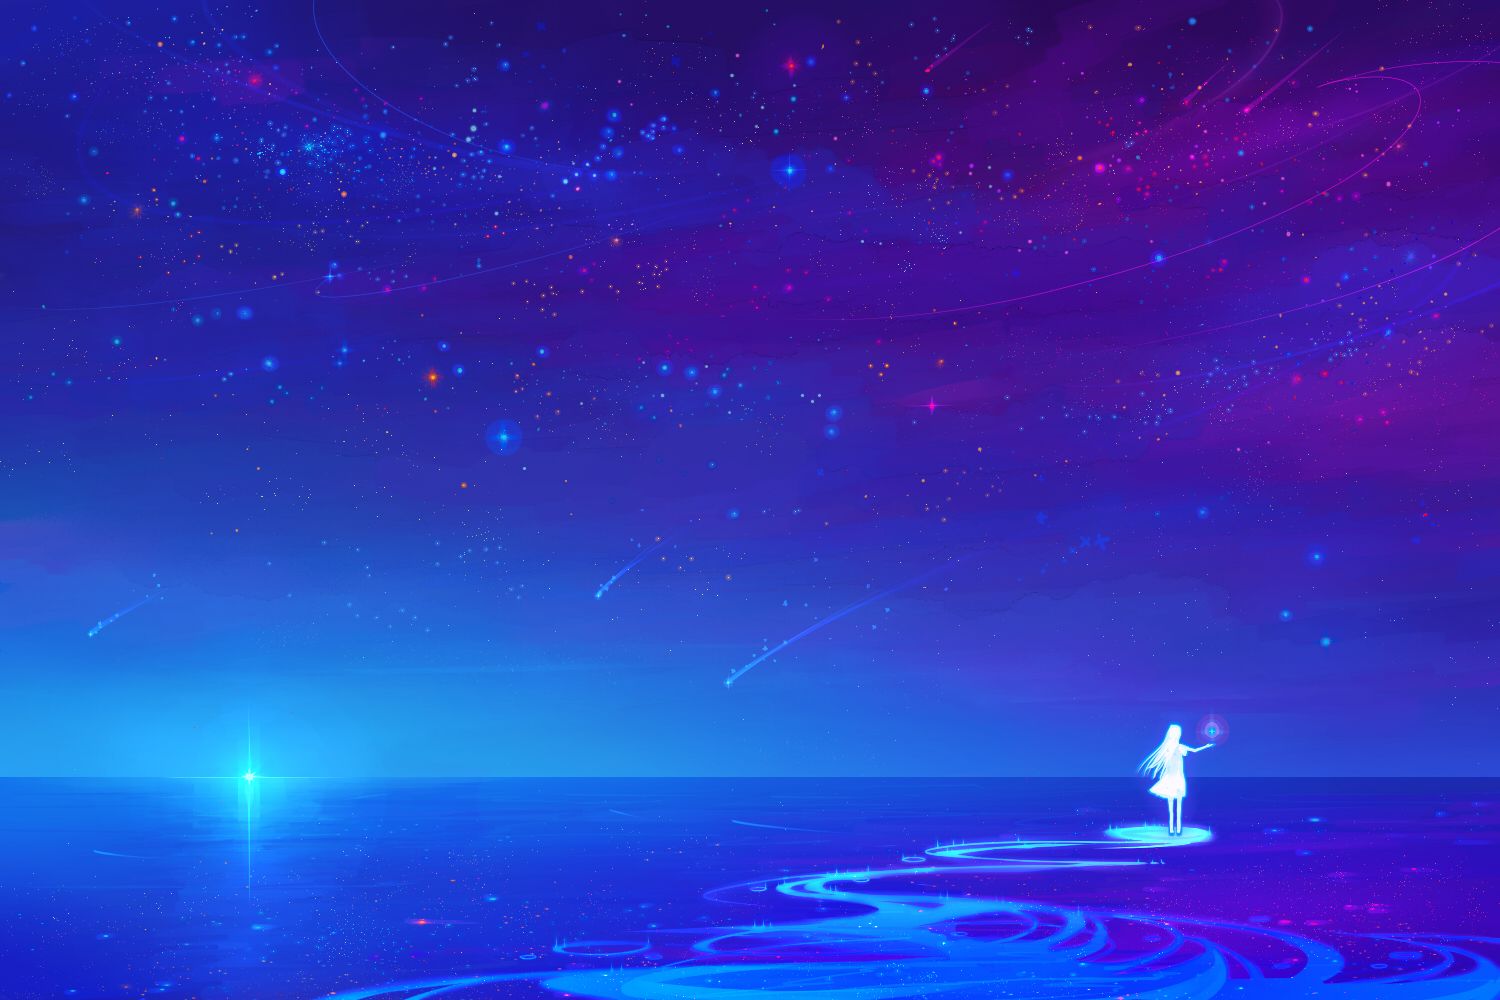 nacht anime wallpaper,himmel,atmosphäre,licht,horizont,nacht